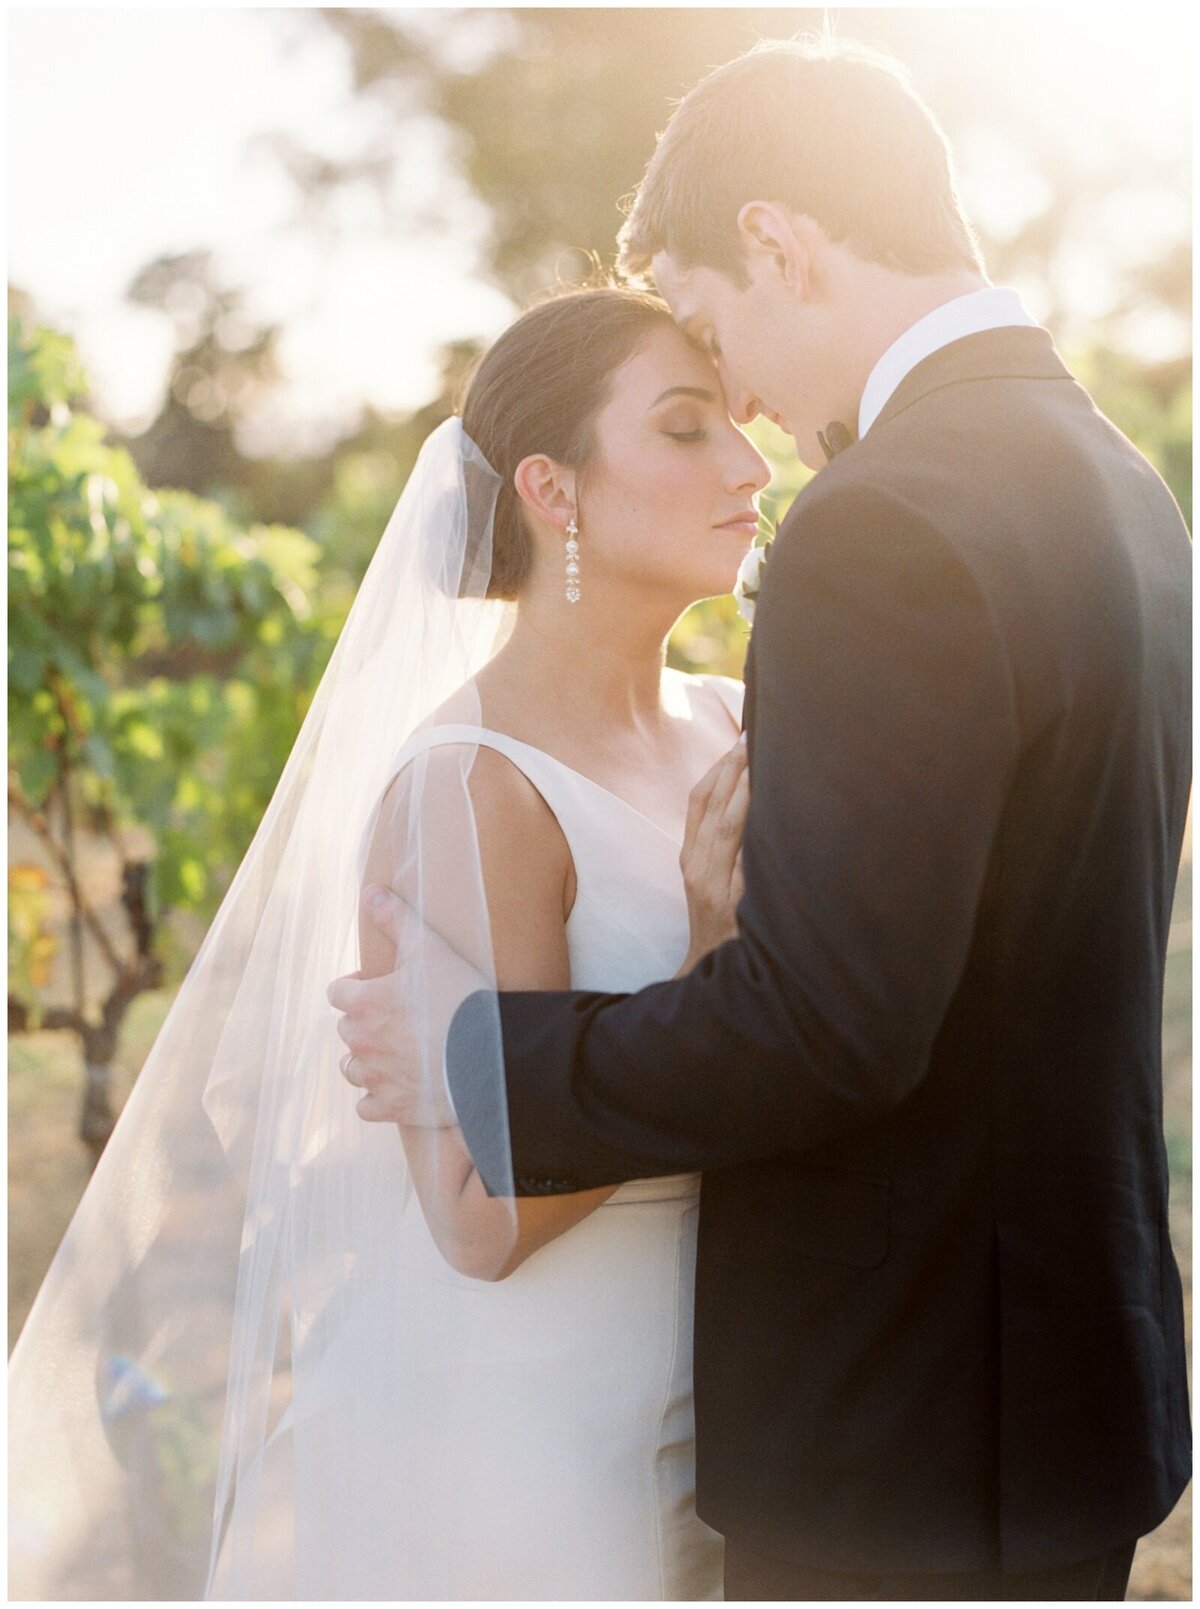 Kelsey-Alex-Sonoma-Buena-Vista-Winery-Wedding-Cassie-Valente-Photography-0170